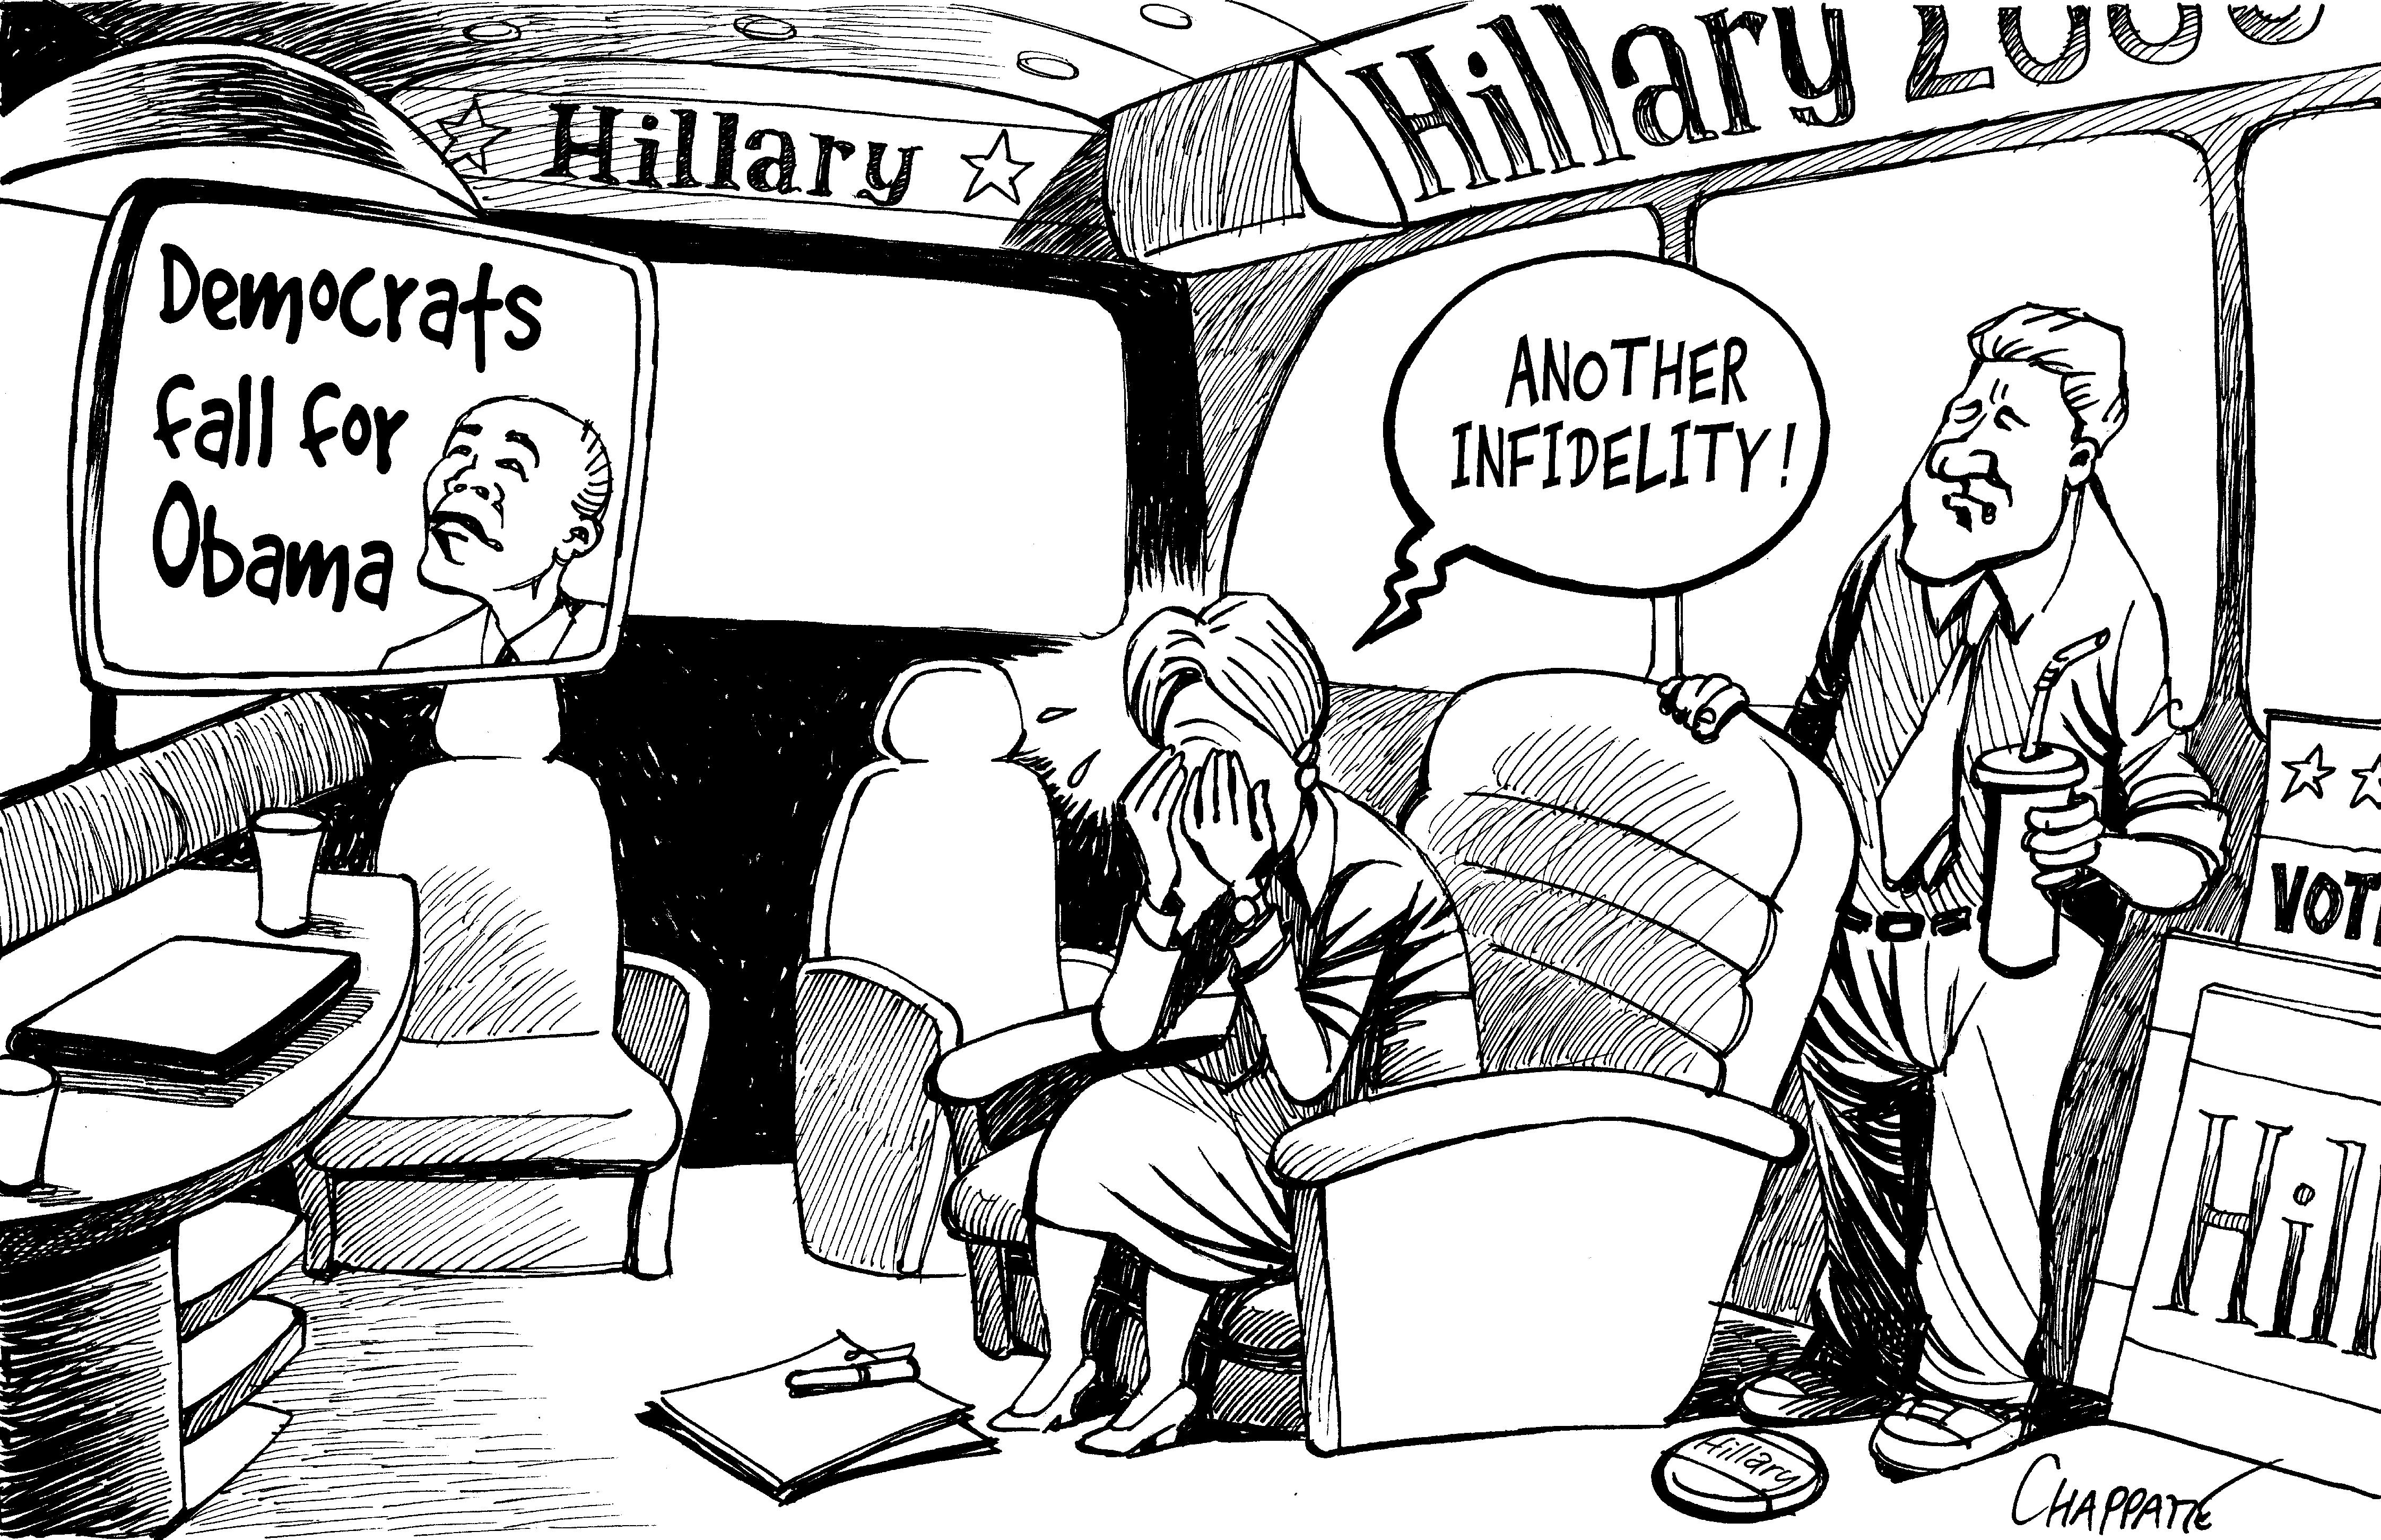 Hillary Clinton in trouble